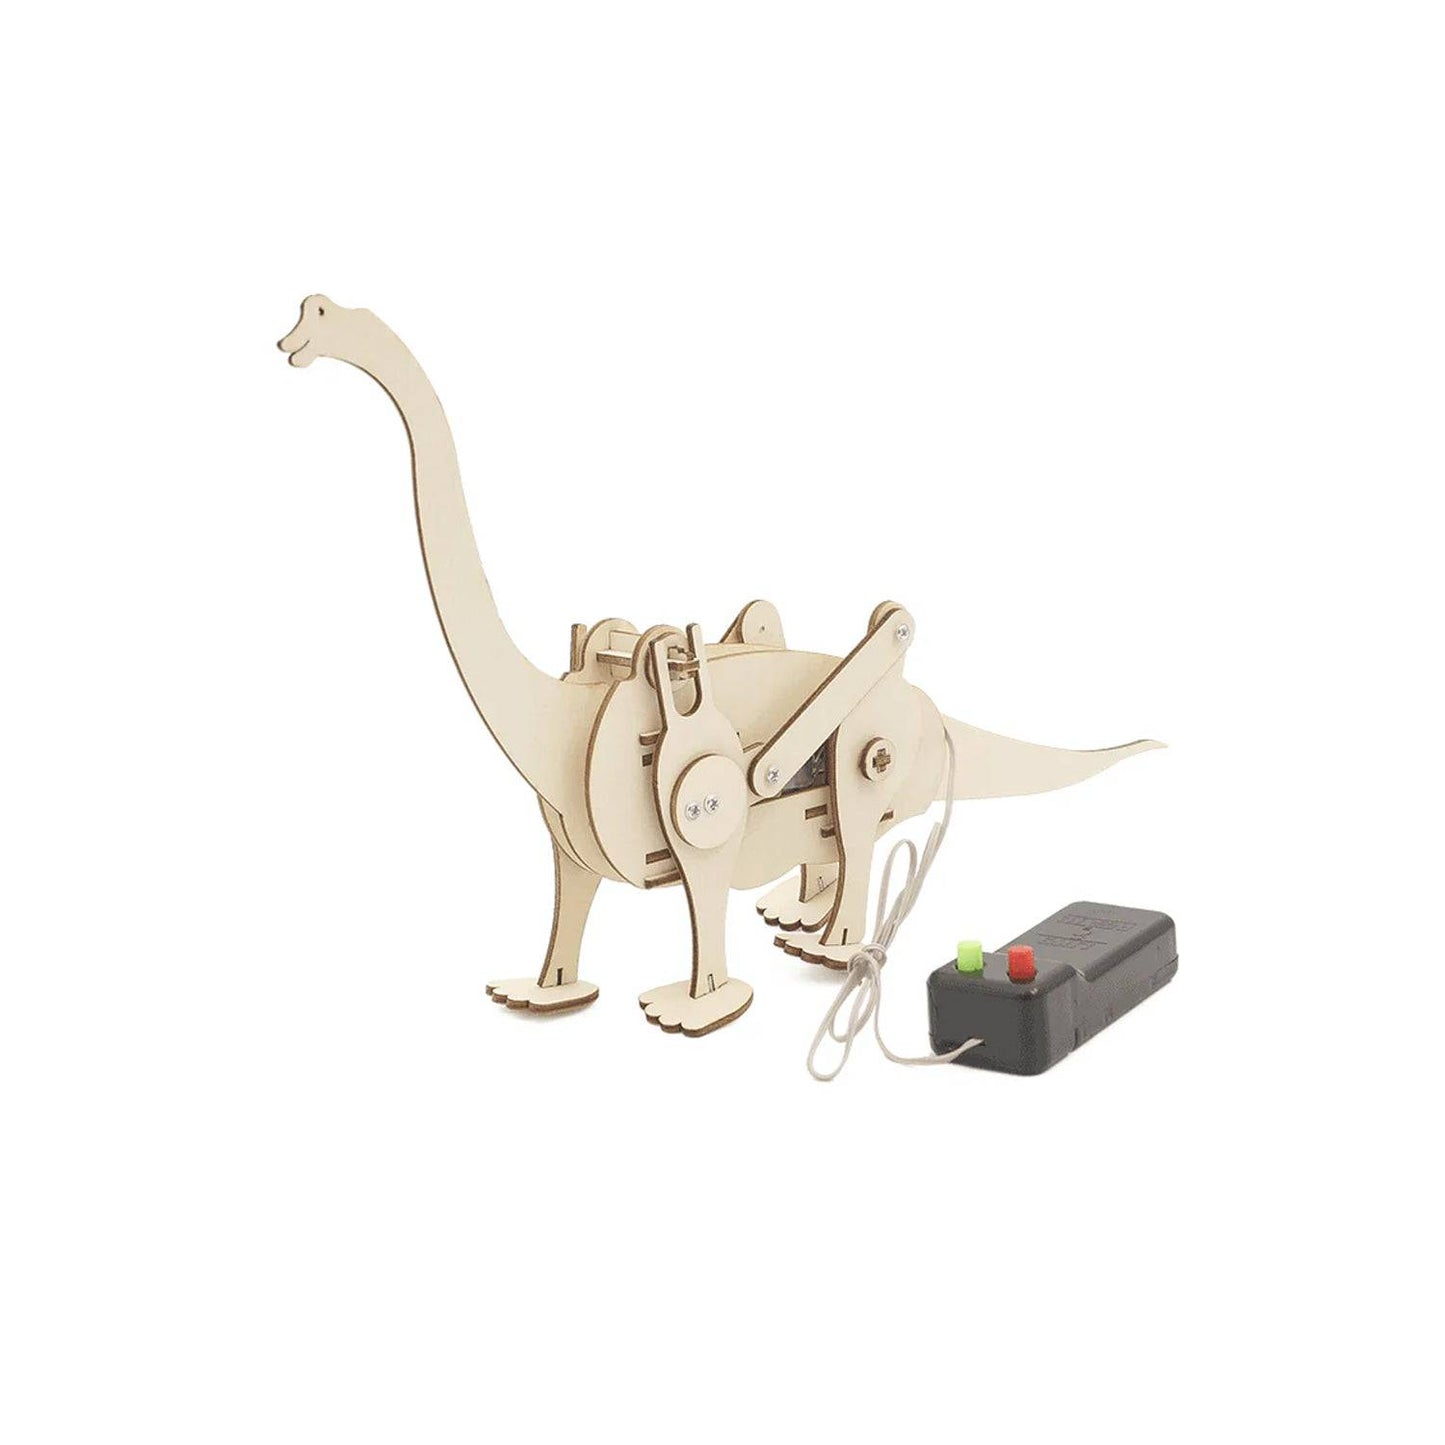 DIY Dinosaur STEM Kit Robot Educational STEM Toy For Kids